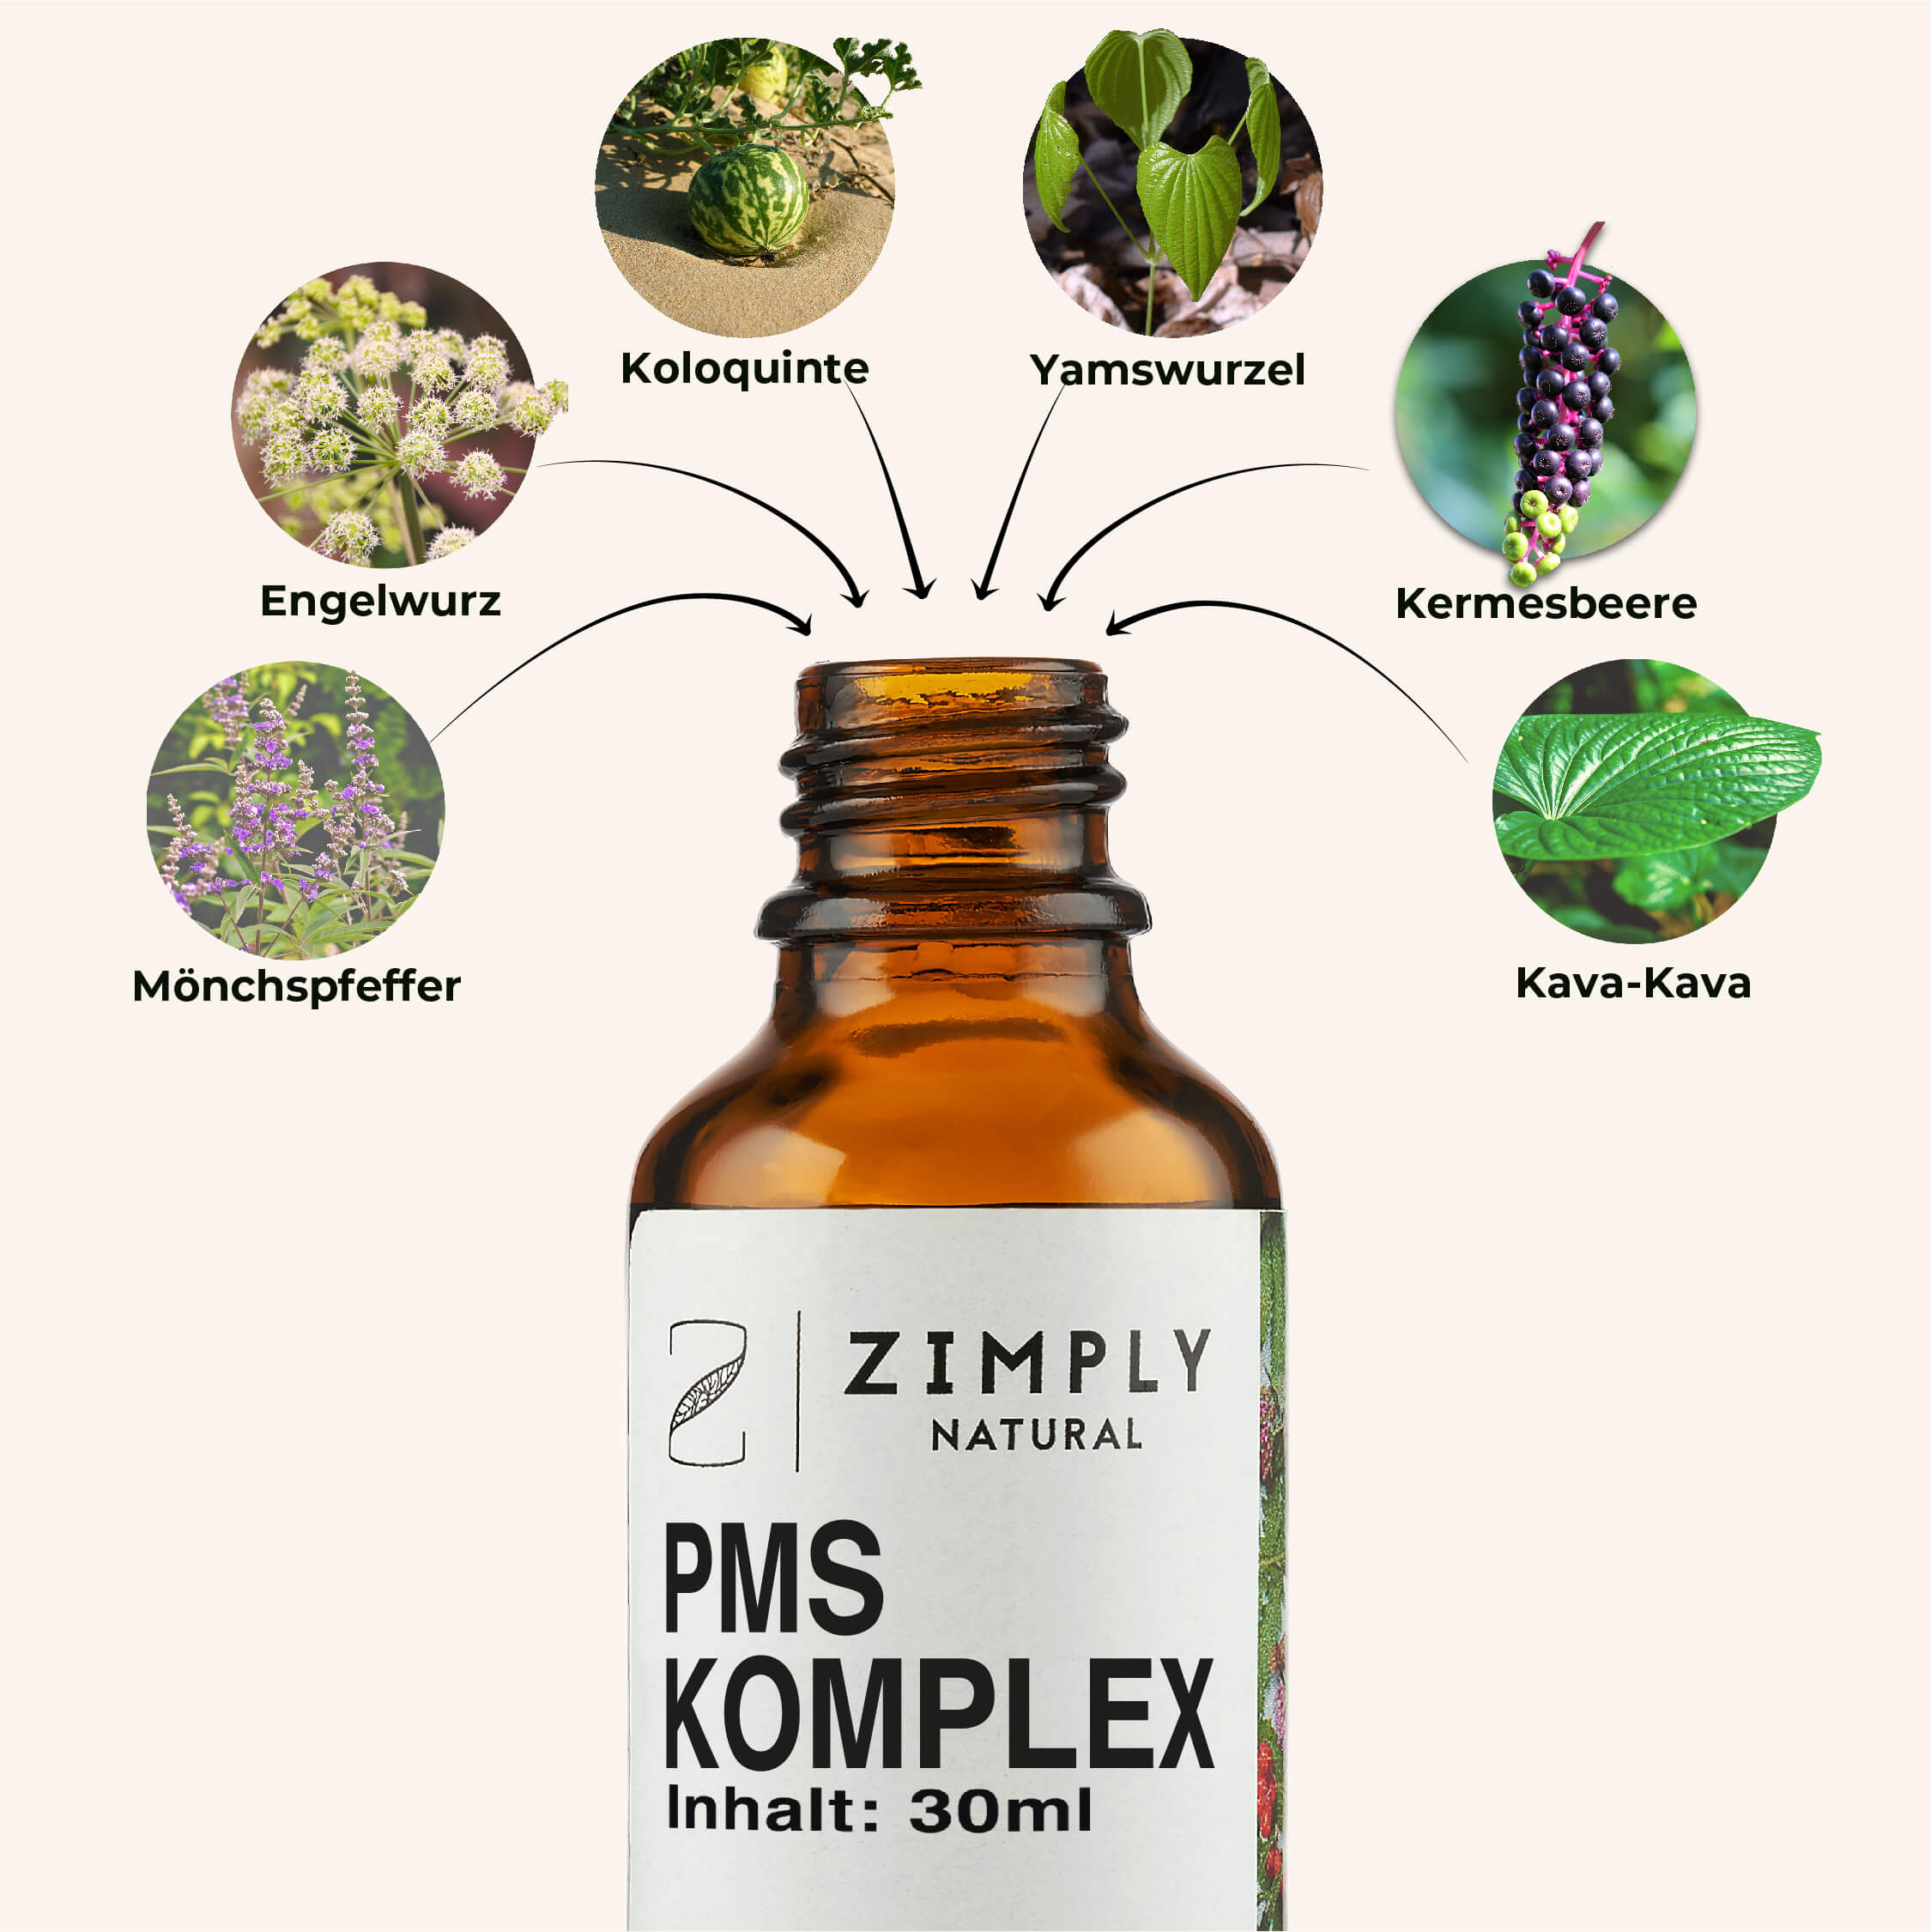 Zimply Natural PMS Komplex Mischung